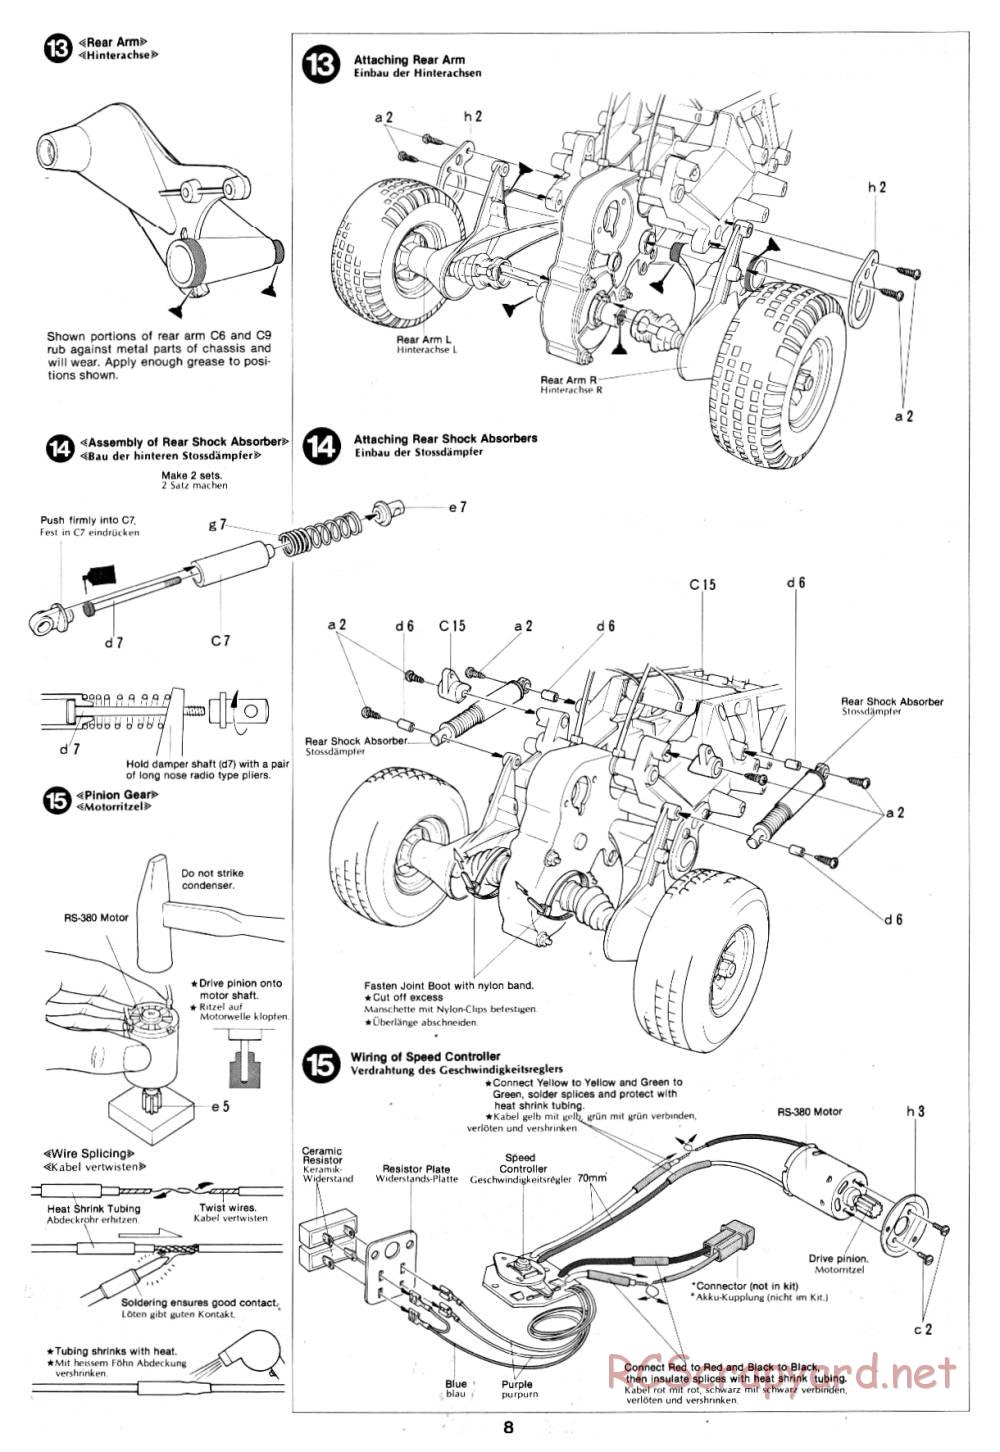 Tamiya - Subaru Brat - 58038 - Manual - Page 8